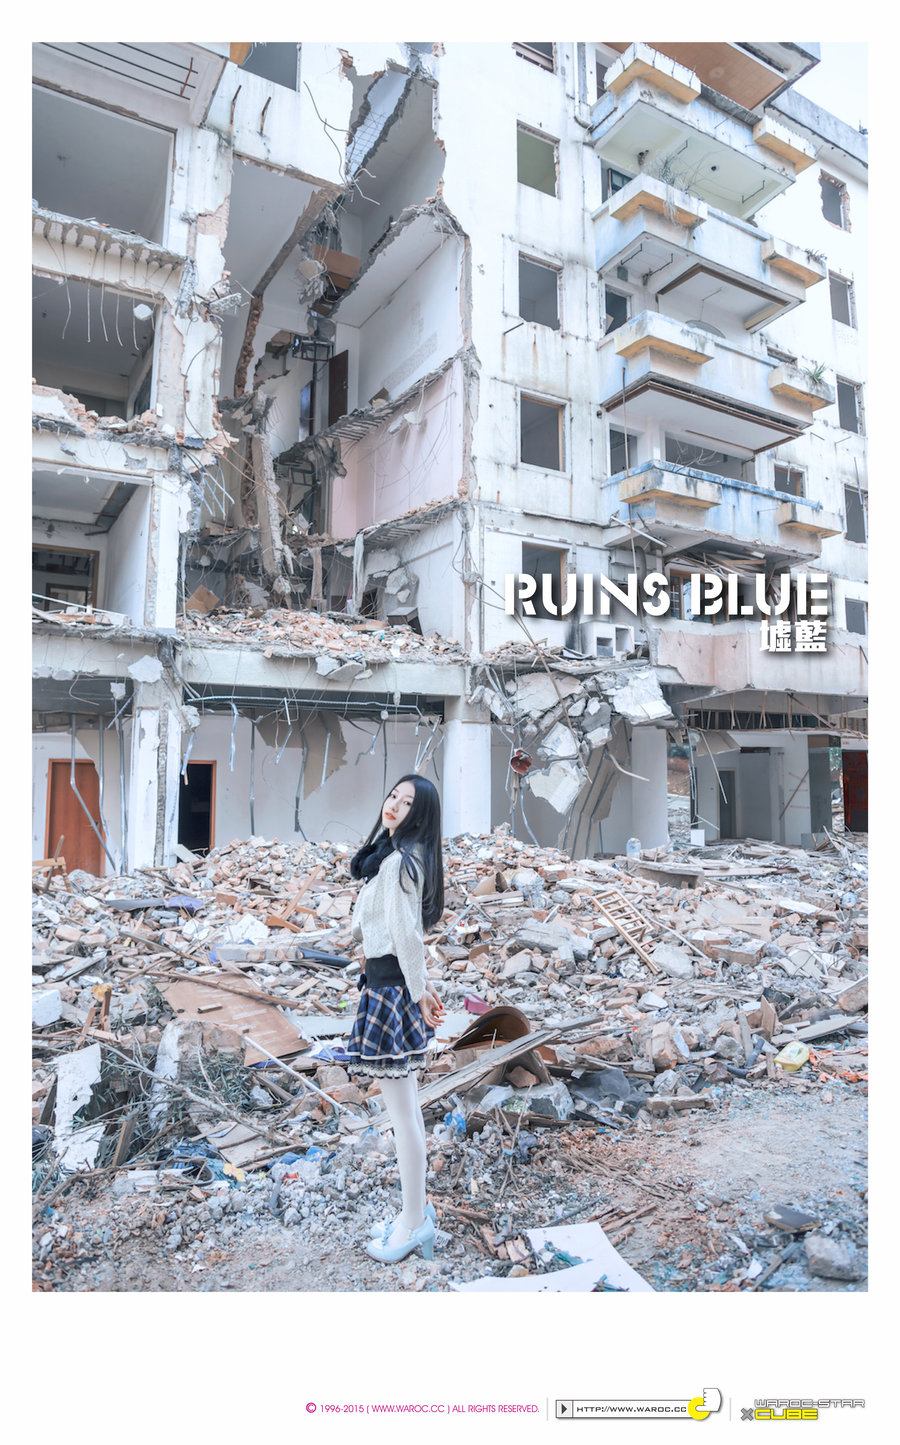 Ruins Blue IRENE